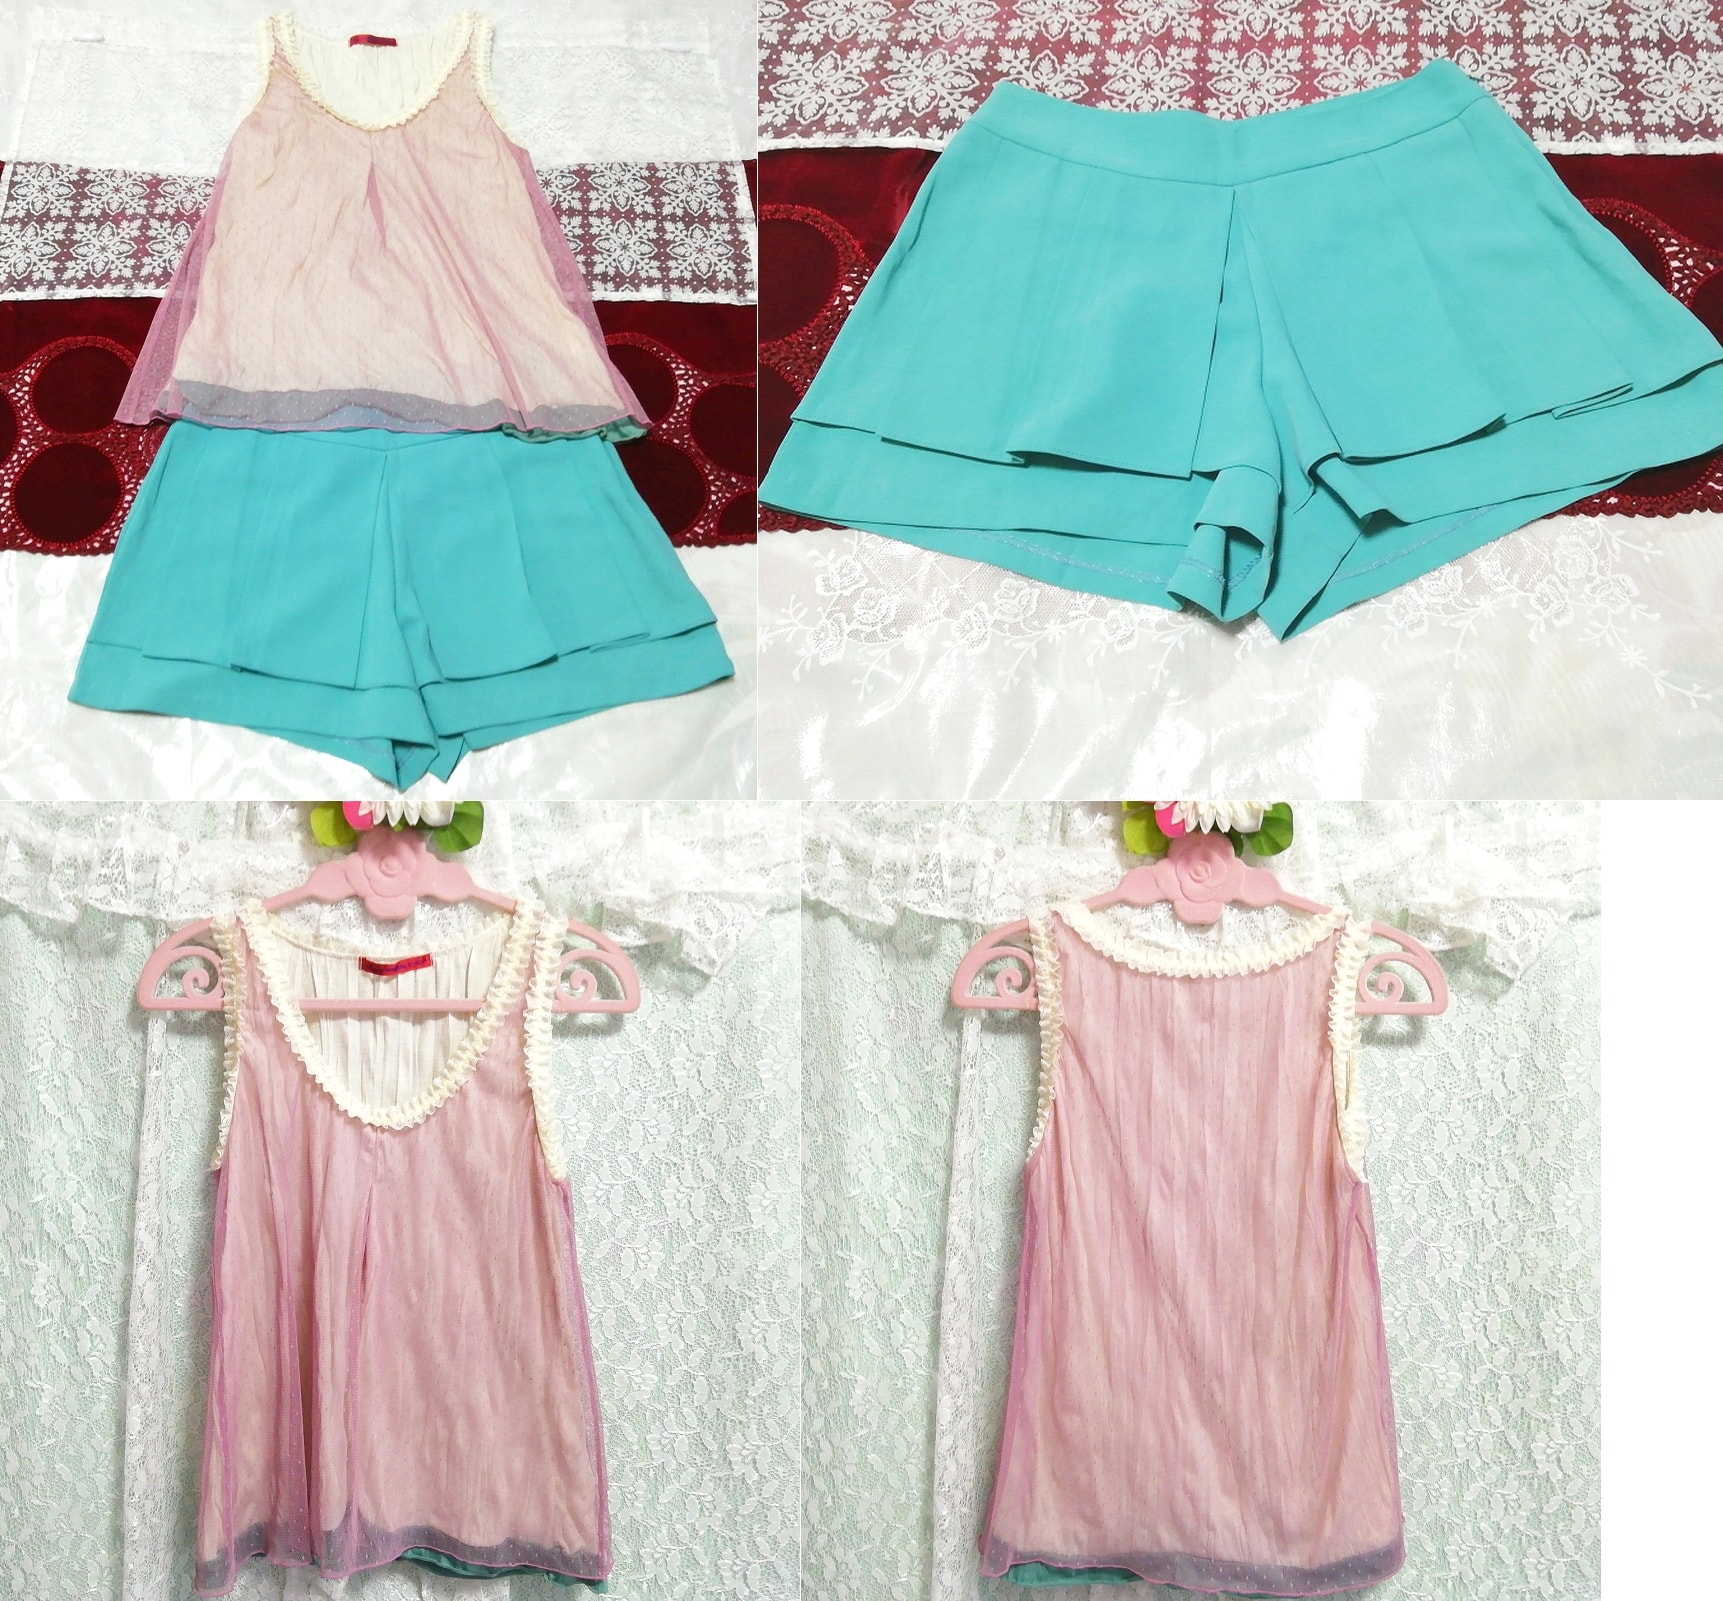 Rosa ärmellose Tunika mit Rüschen, Negligé-Nachthemd, grüne Shorts, 2 Stück, Mode, Frauenmode, Nachtwäsche, Pyjama